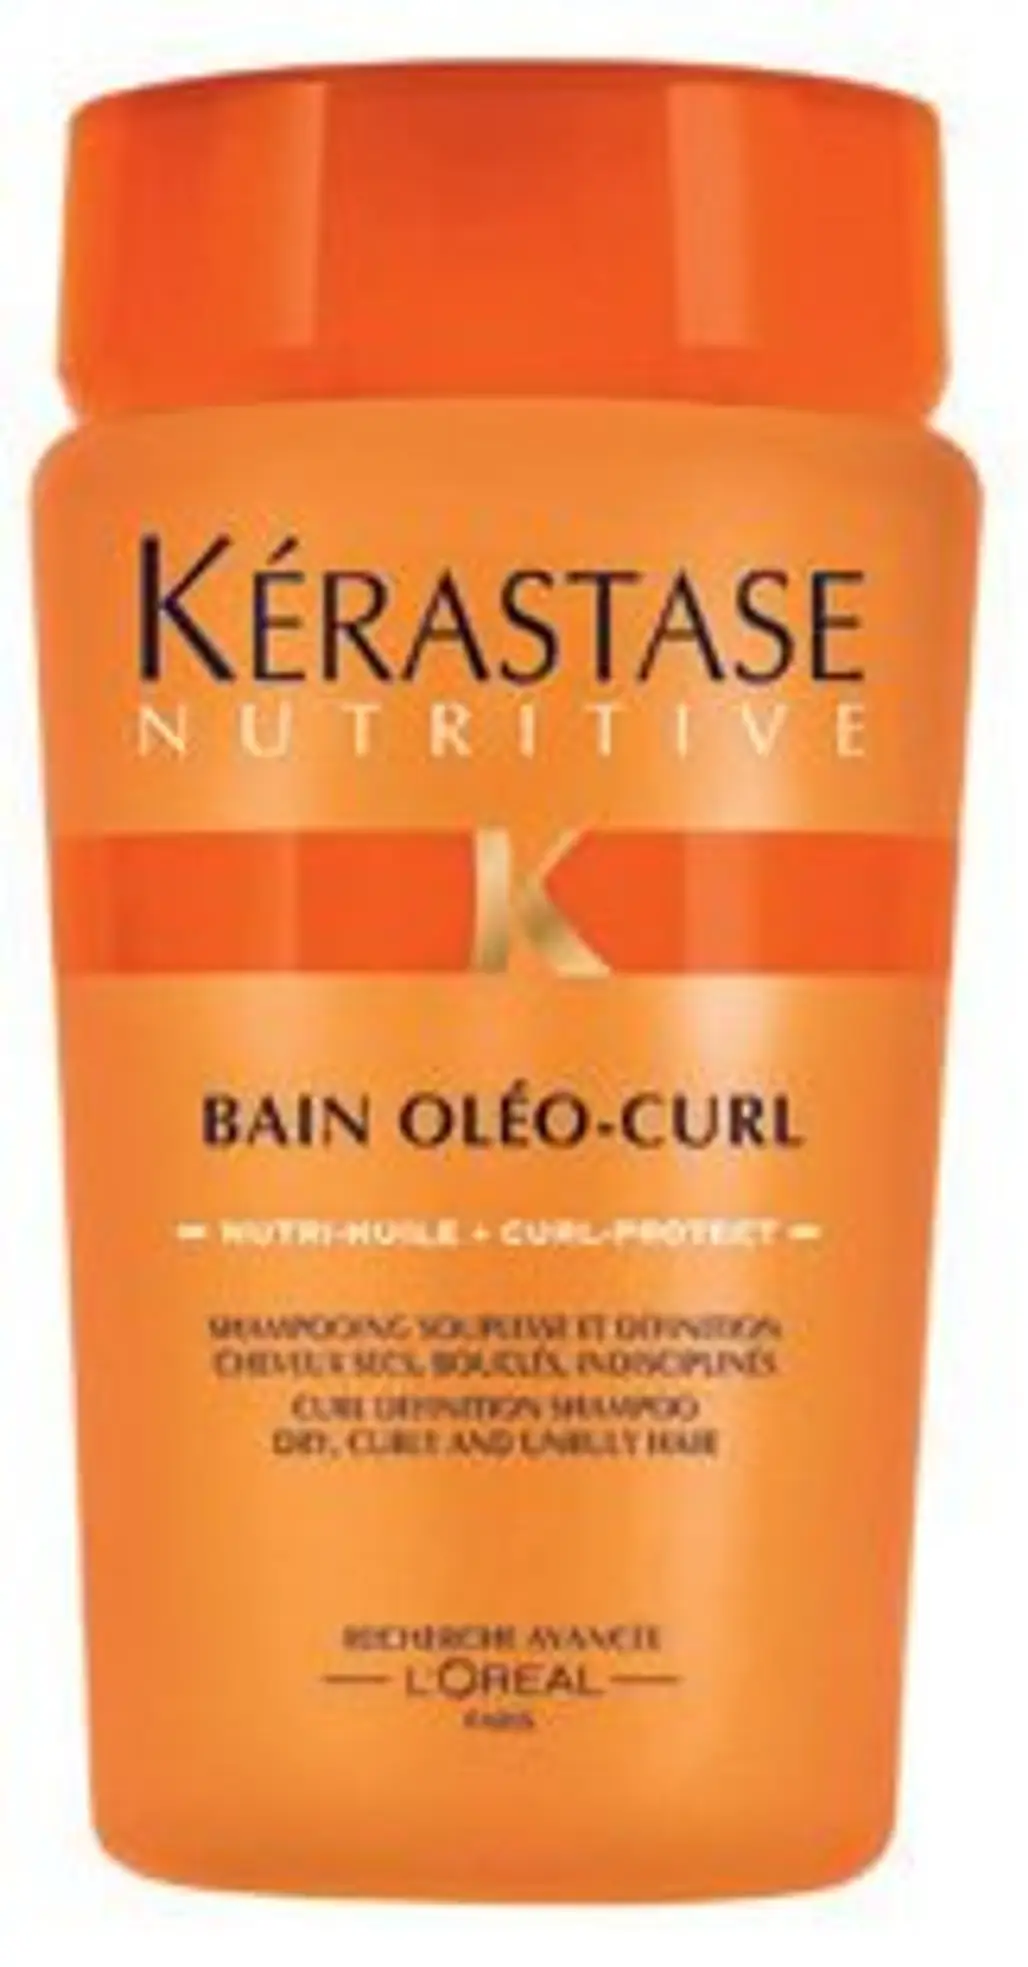 Bain Oleo – Curl by Keratase